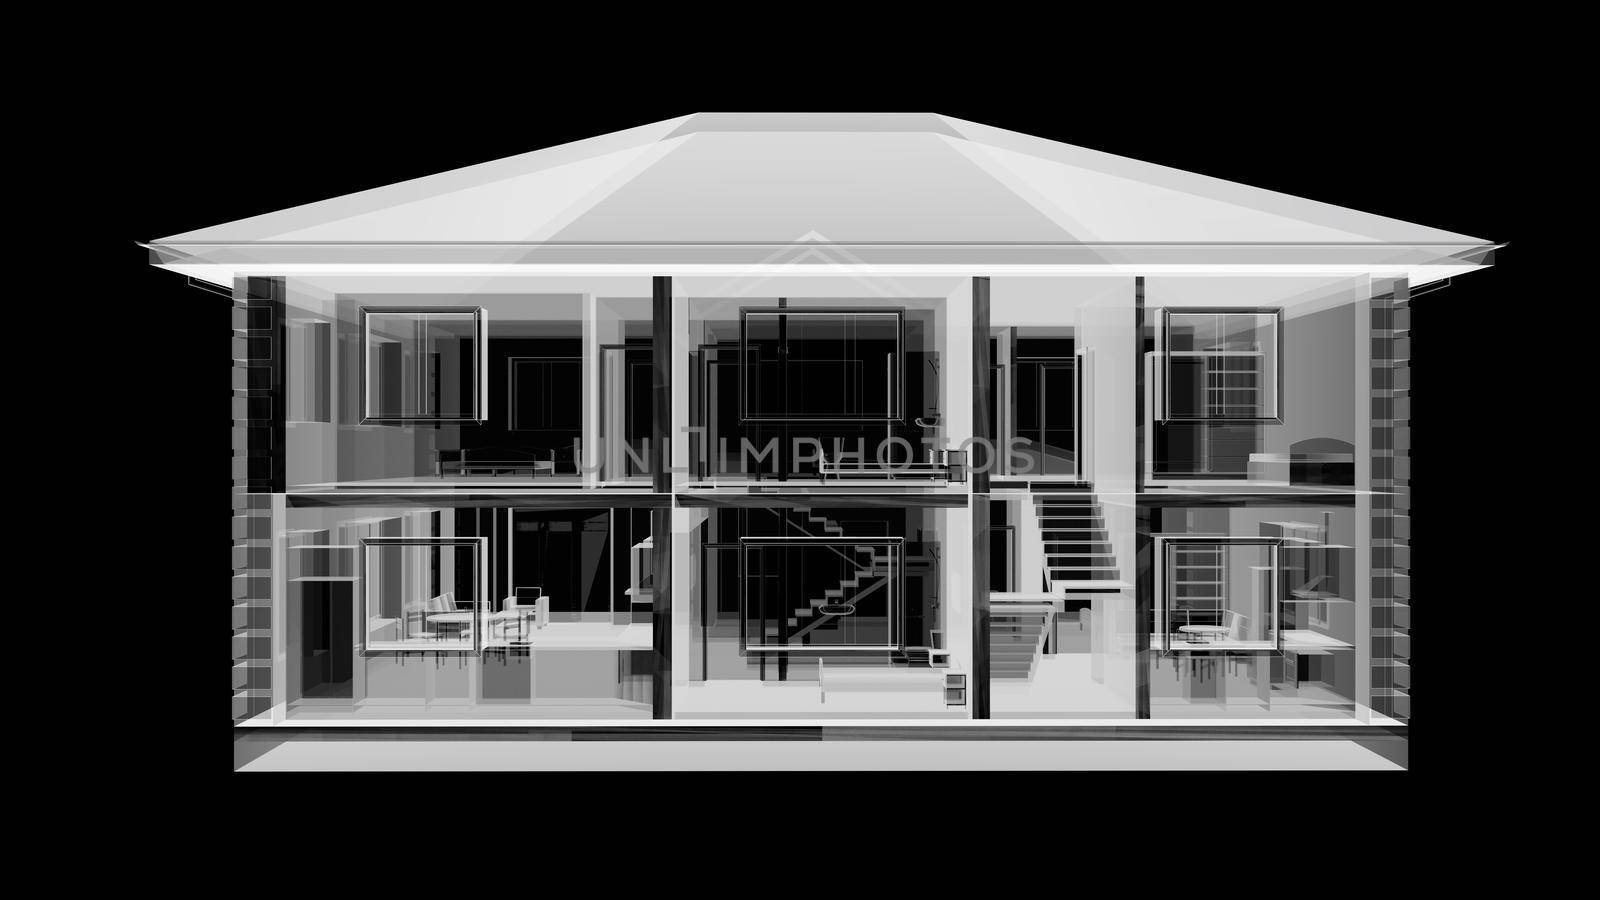 House 3D rendered xray transparent. 3d illustration